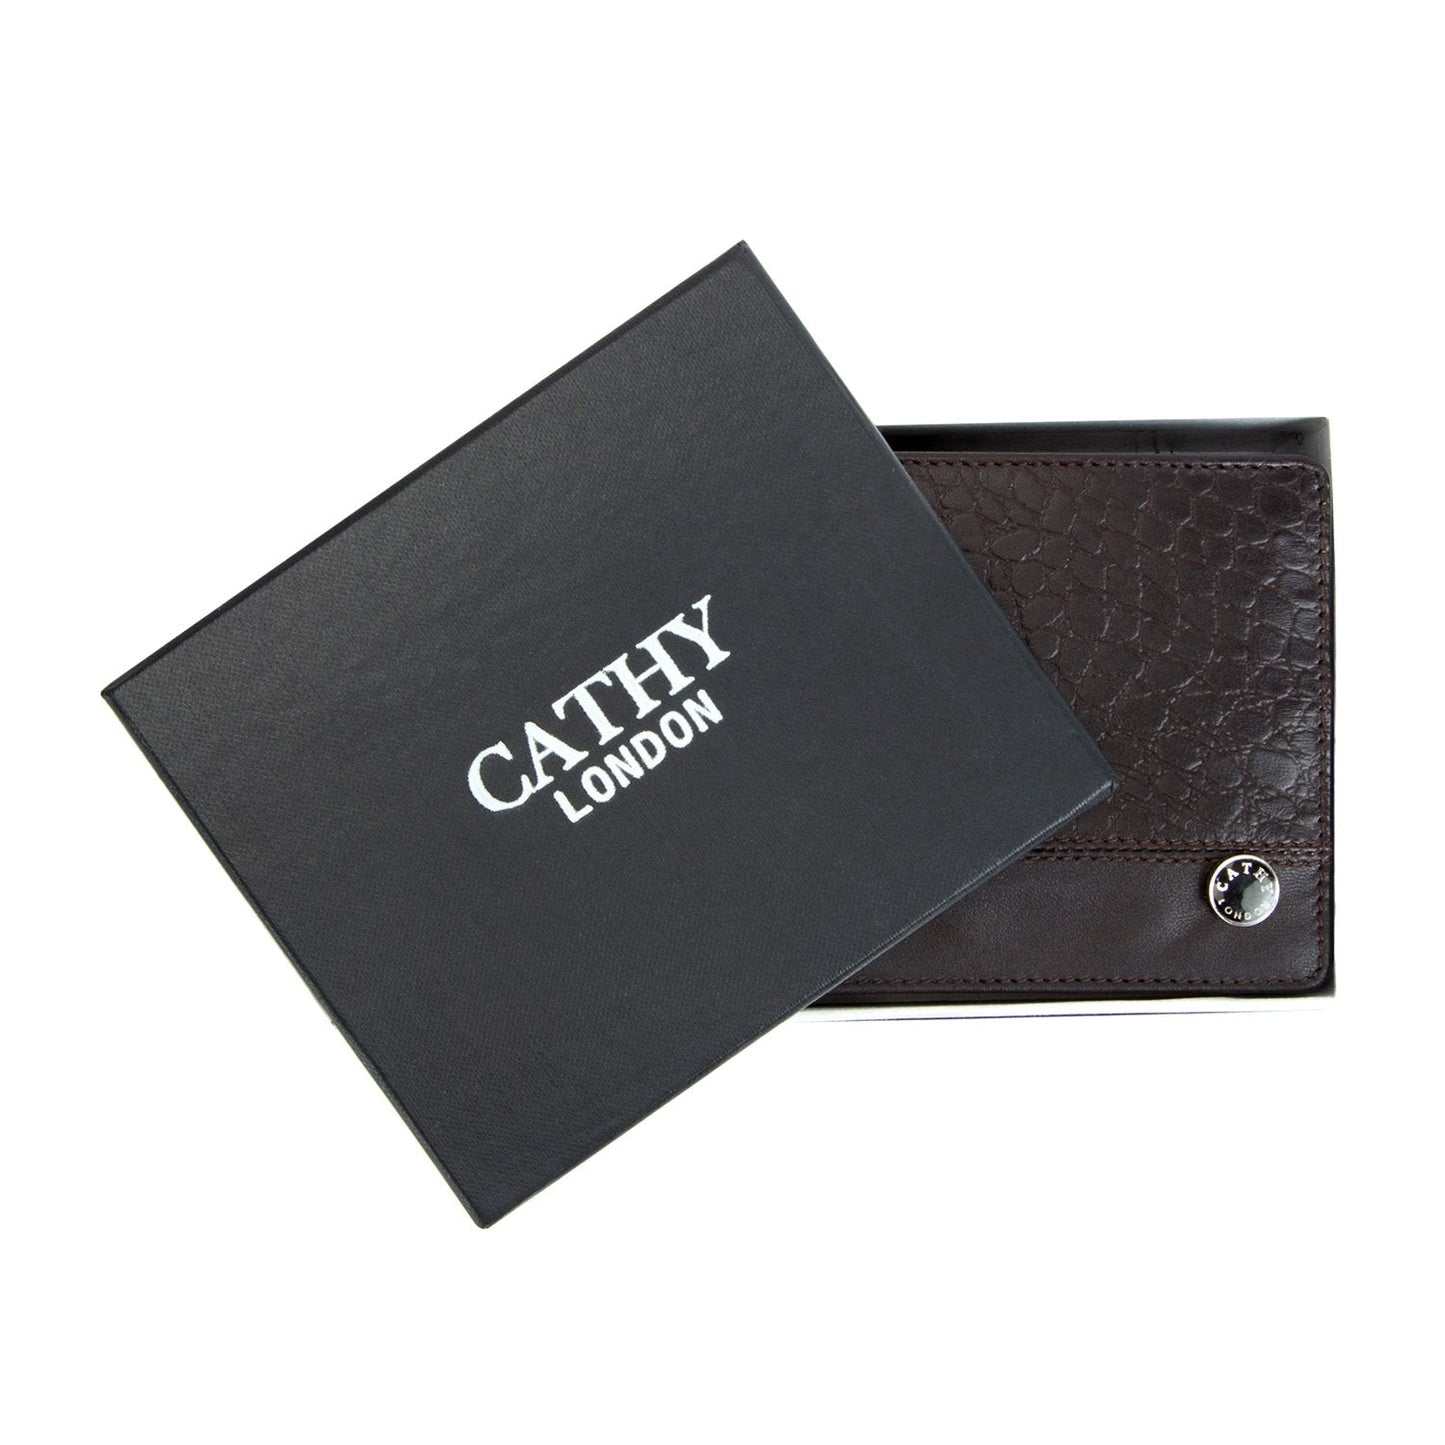 Brown Colour Bi-Fold Italian Leather Slim Wallet ( 3 Card Slot + 2 Hidden Compartment +Coin Pocket + Cash Compartment )